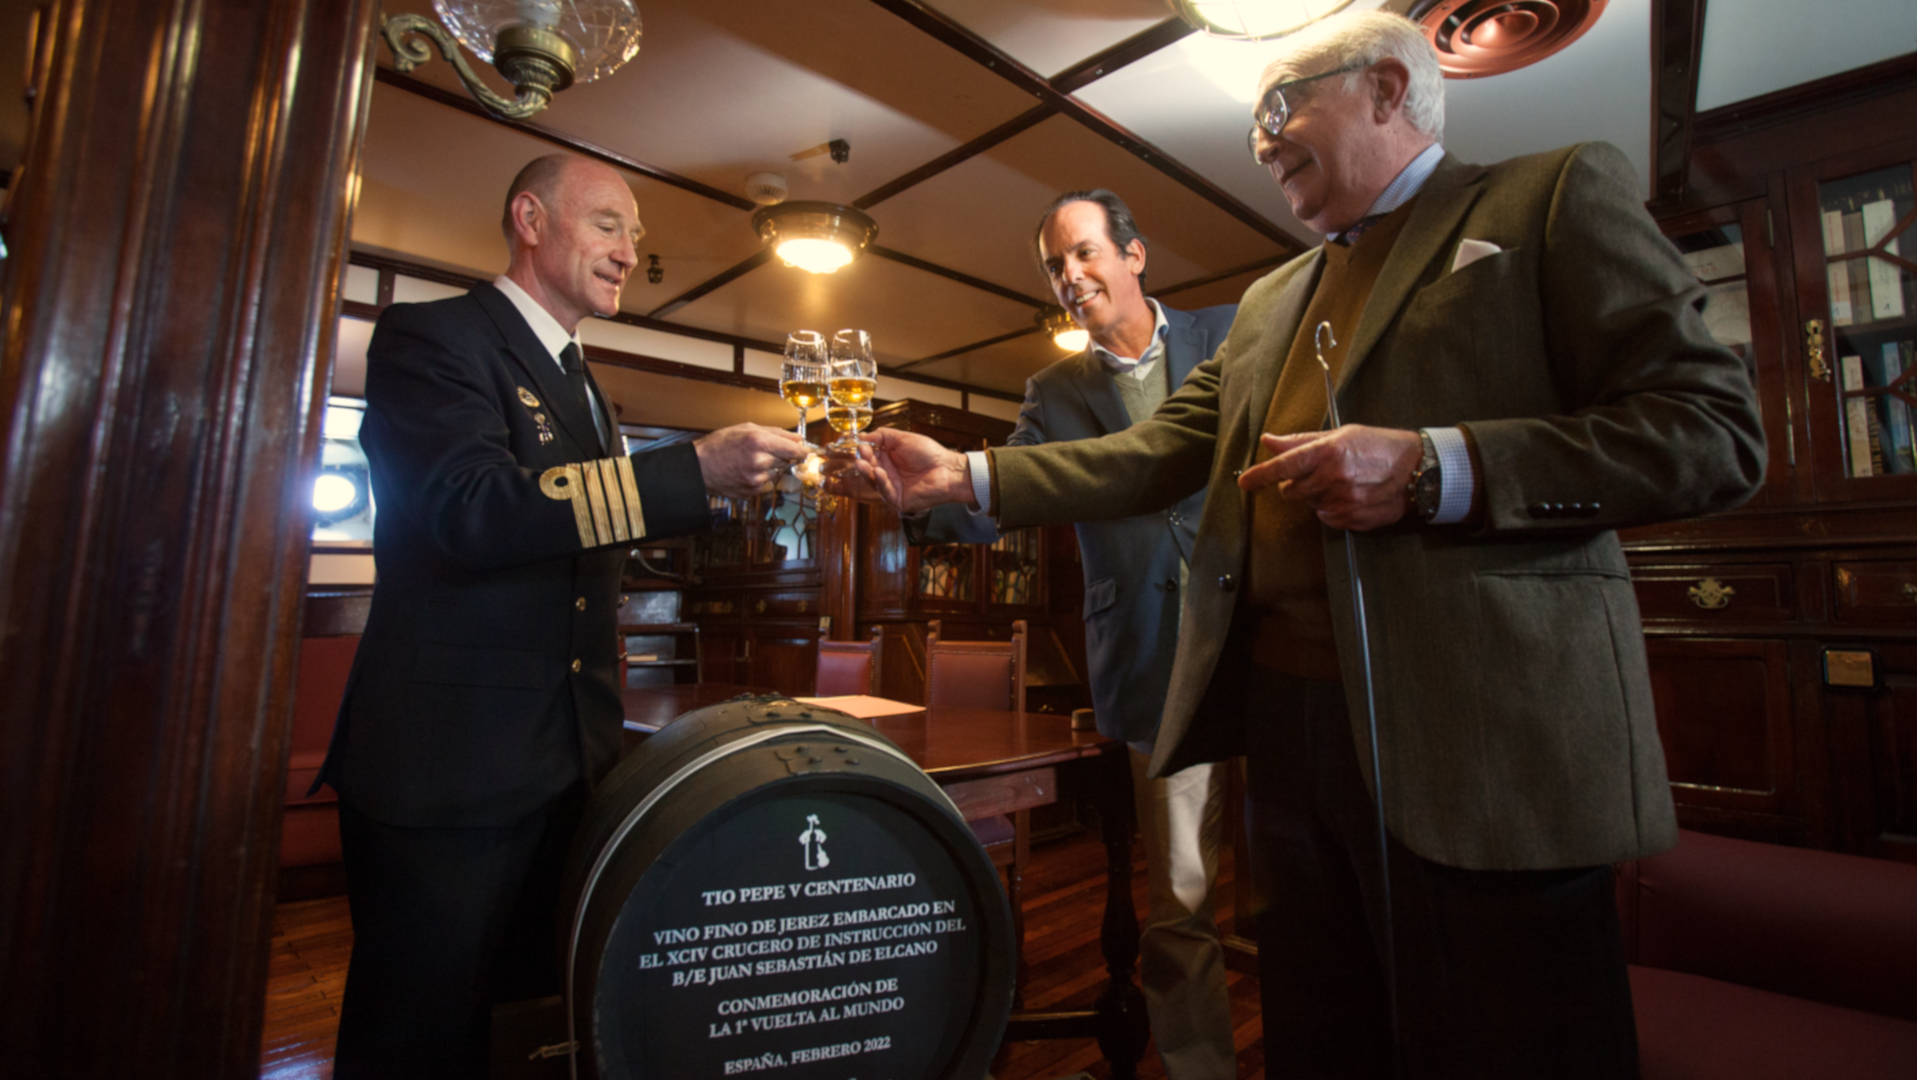 Captain of the Training Ship Juan Sebastián de Elcano receiving the Tio Pepe's cask